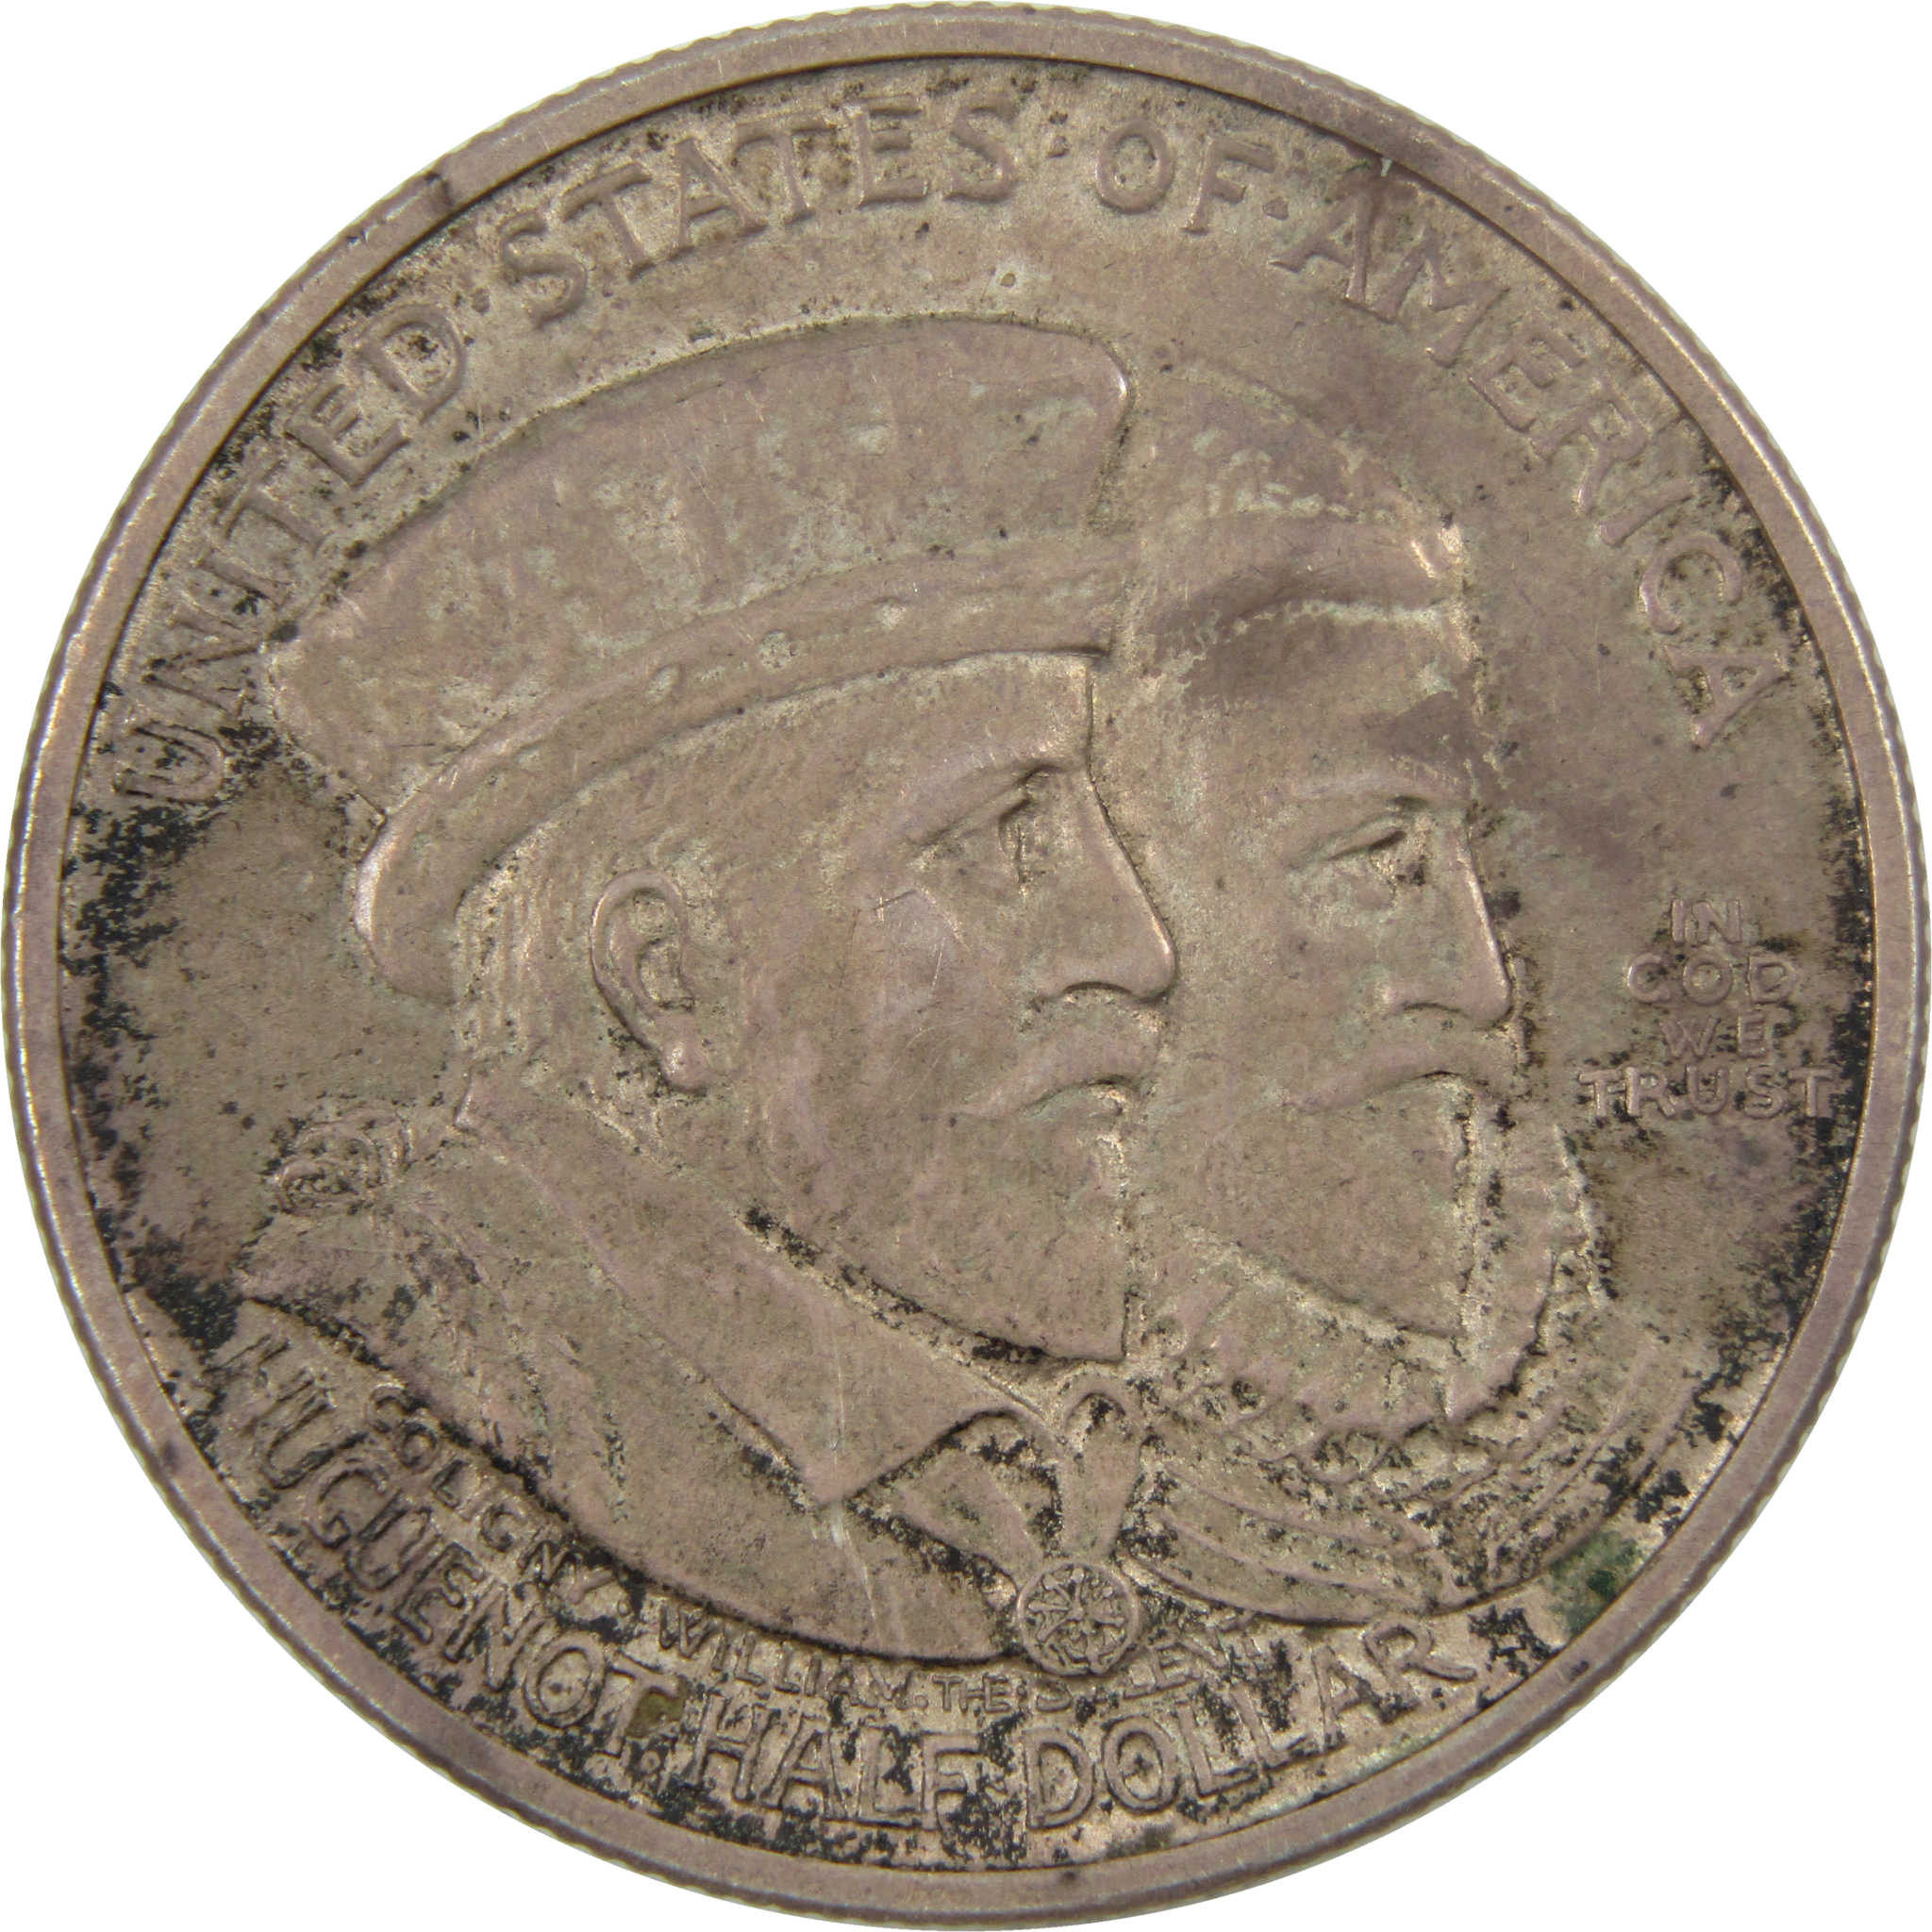 Huguenot-Walloon Half Dollar 1924 XF Extremely Fine Silver SKU:I4222